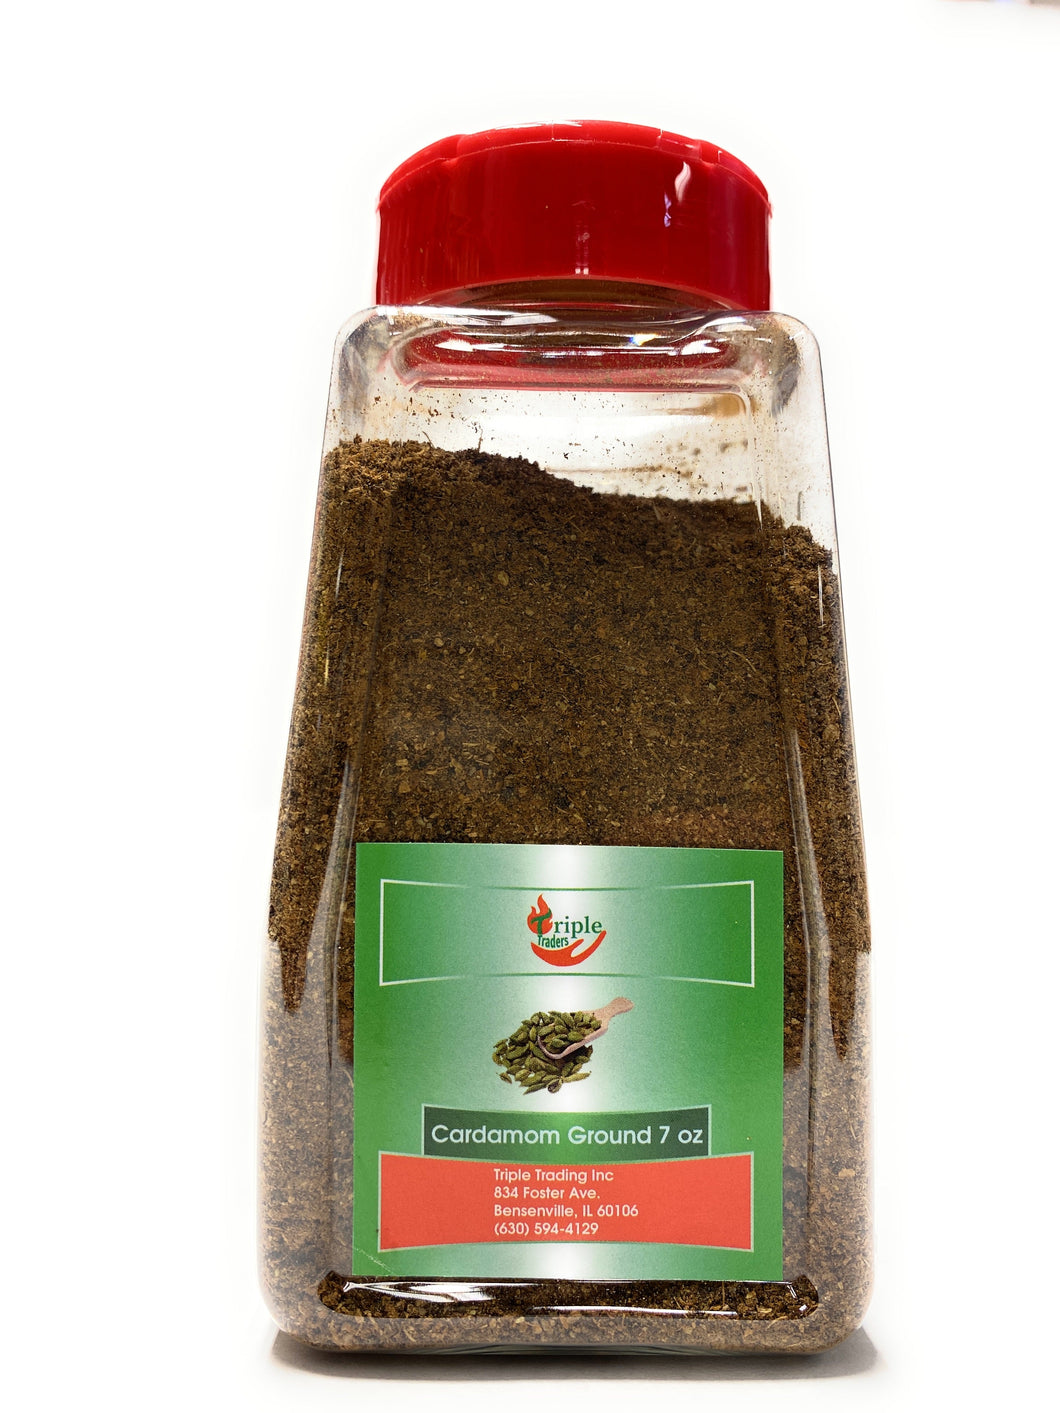 Cardamom Ground 7 oz. by Triple Traders Premium Quality Spices